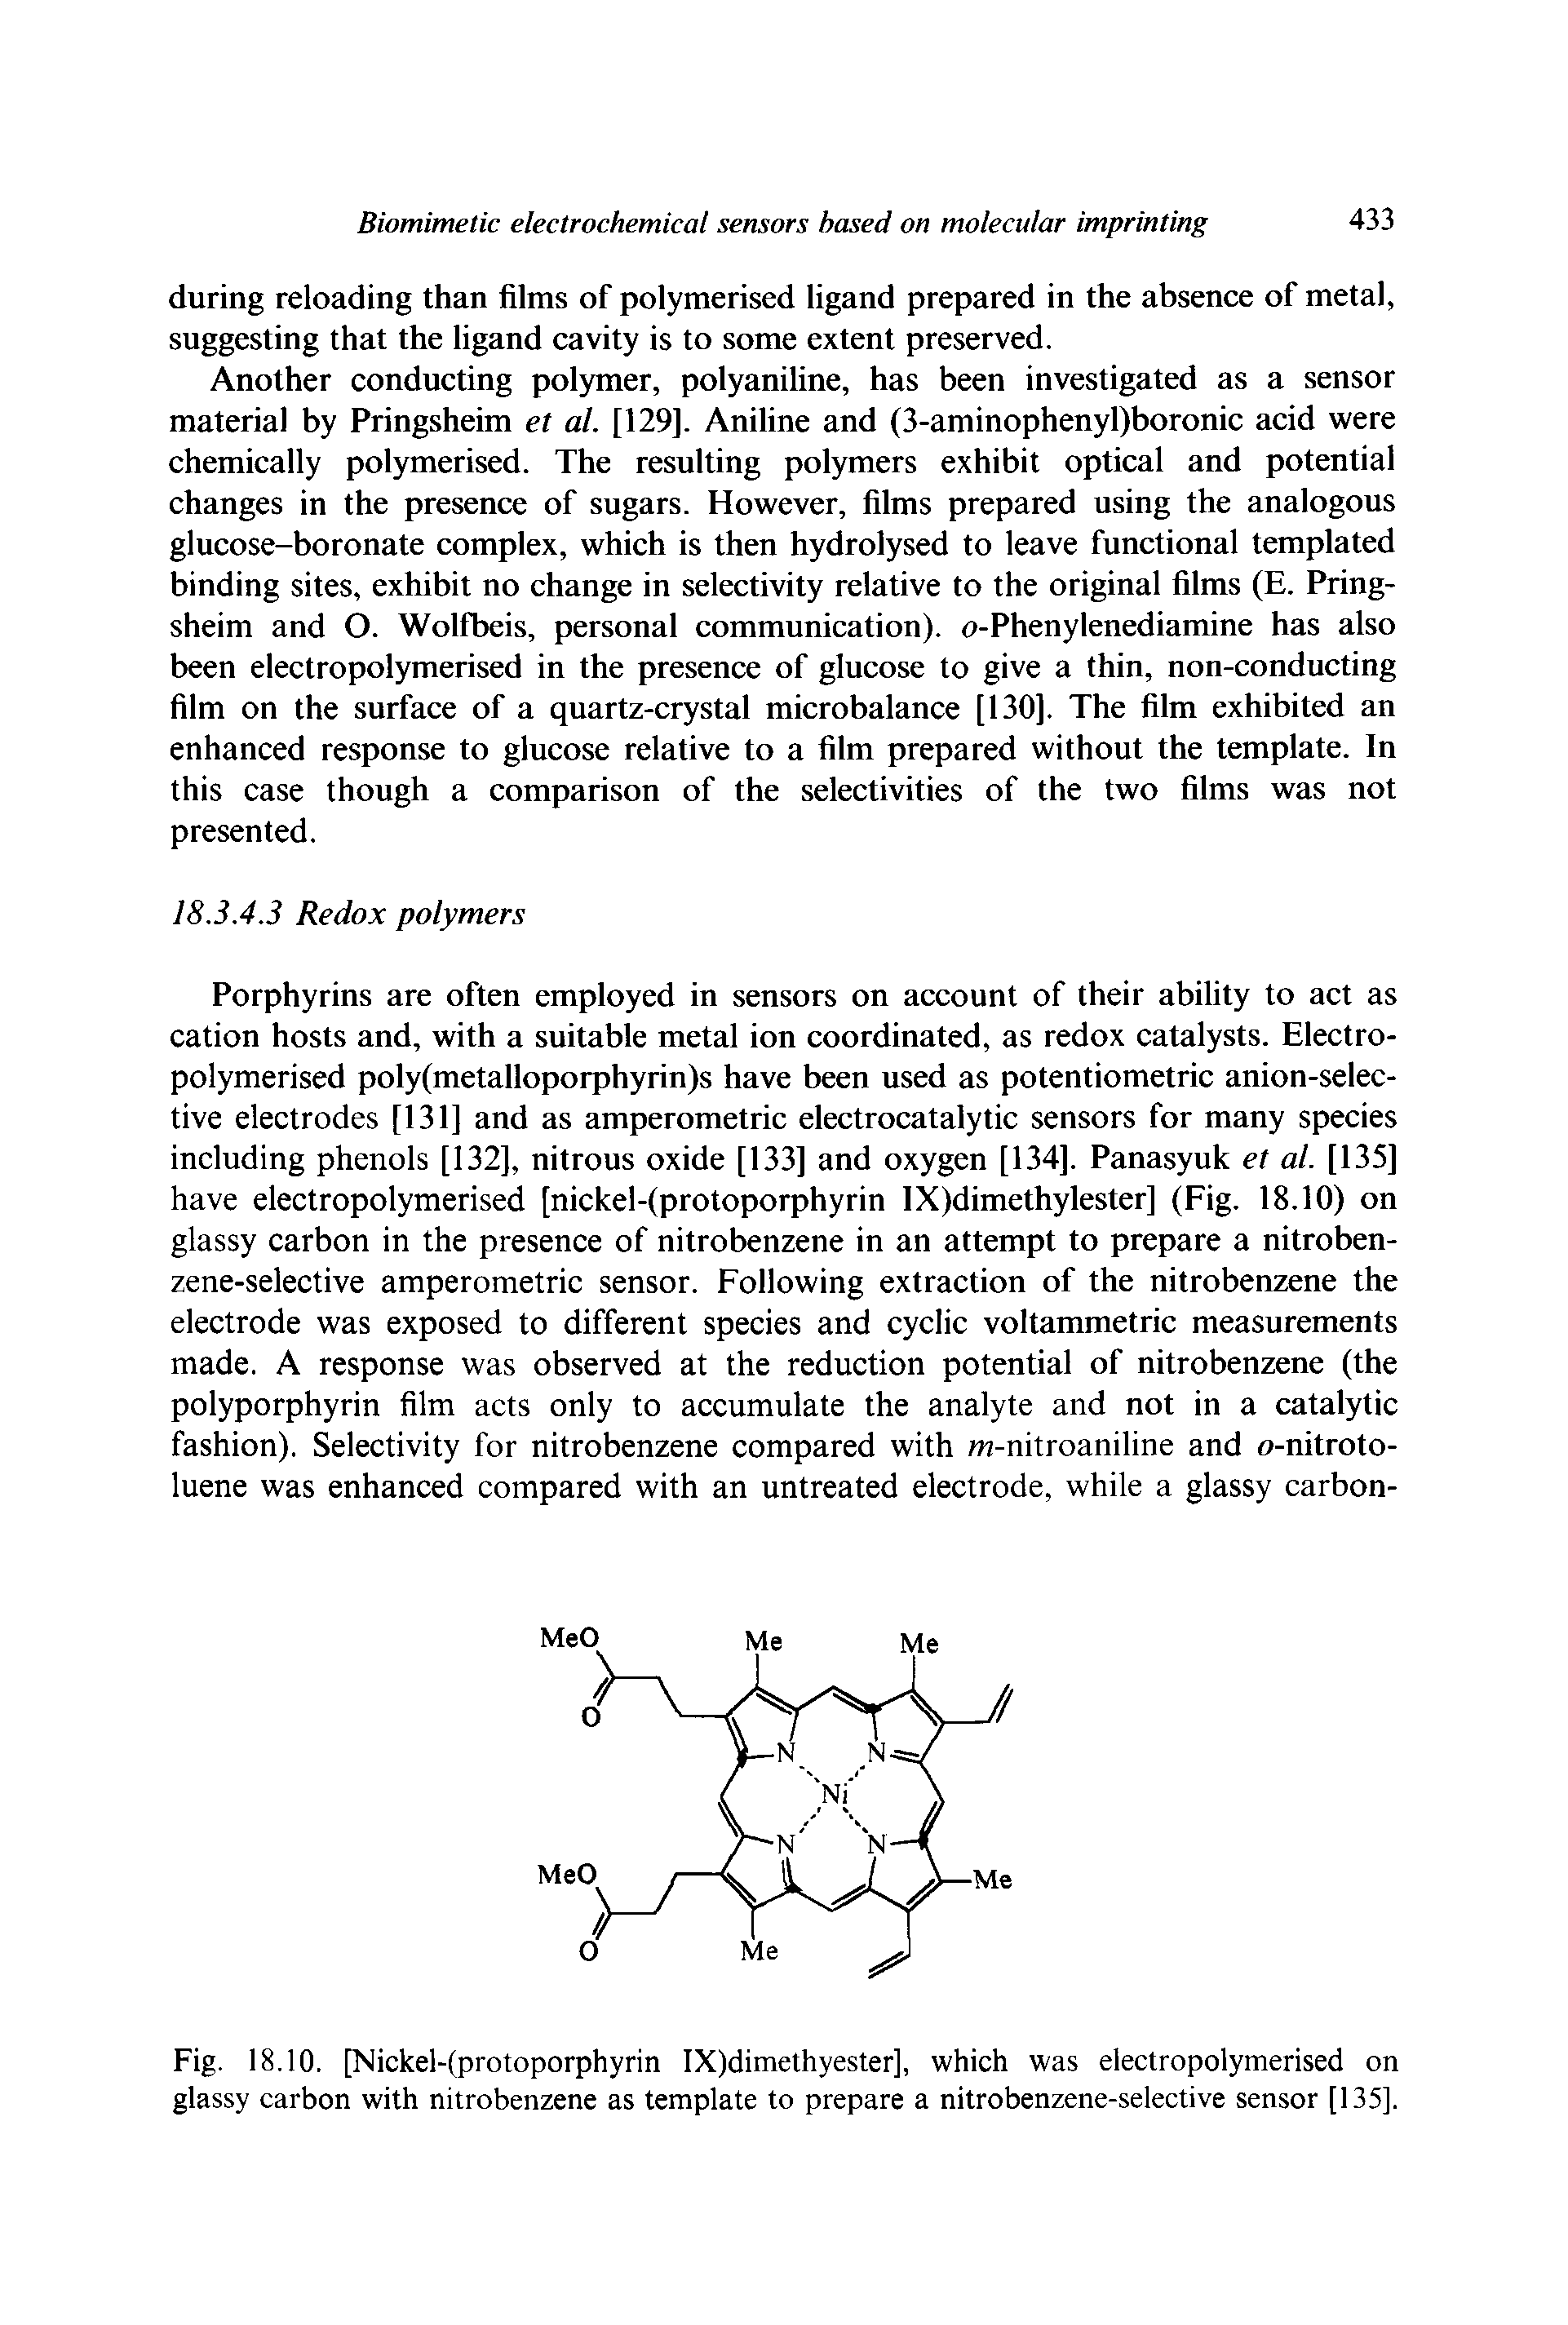 Fig. 18.10. [Nickel-(protoporphyrin IX)dimethyester], which was electropolymerised on glassy carbon with nitrobenzene as template to prepare a nitrobenzene-selective sensor [135].